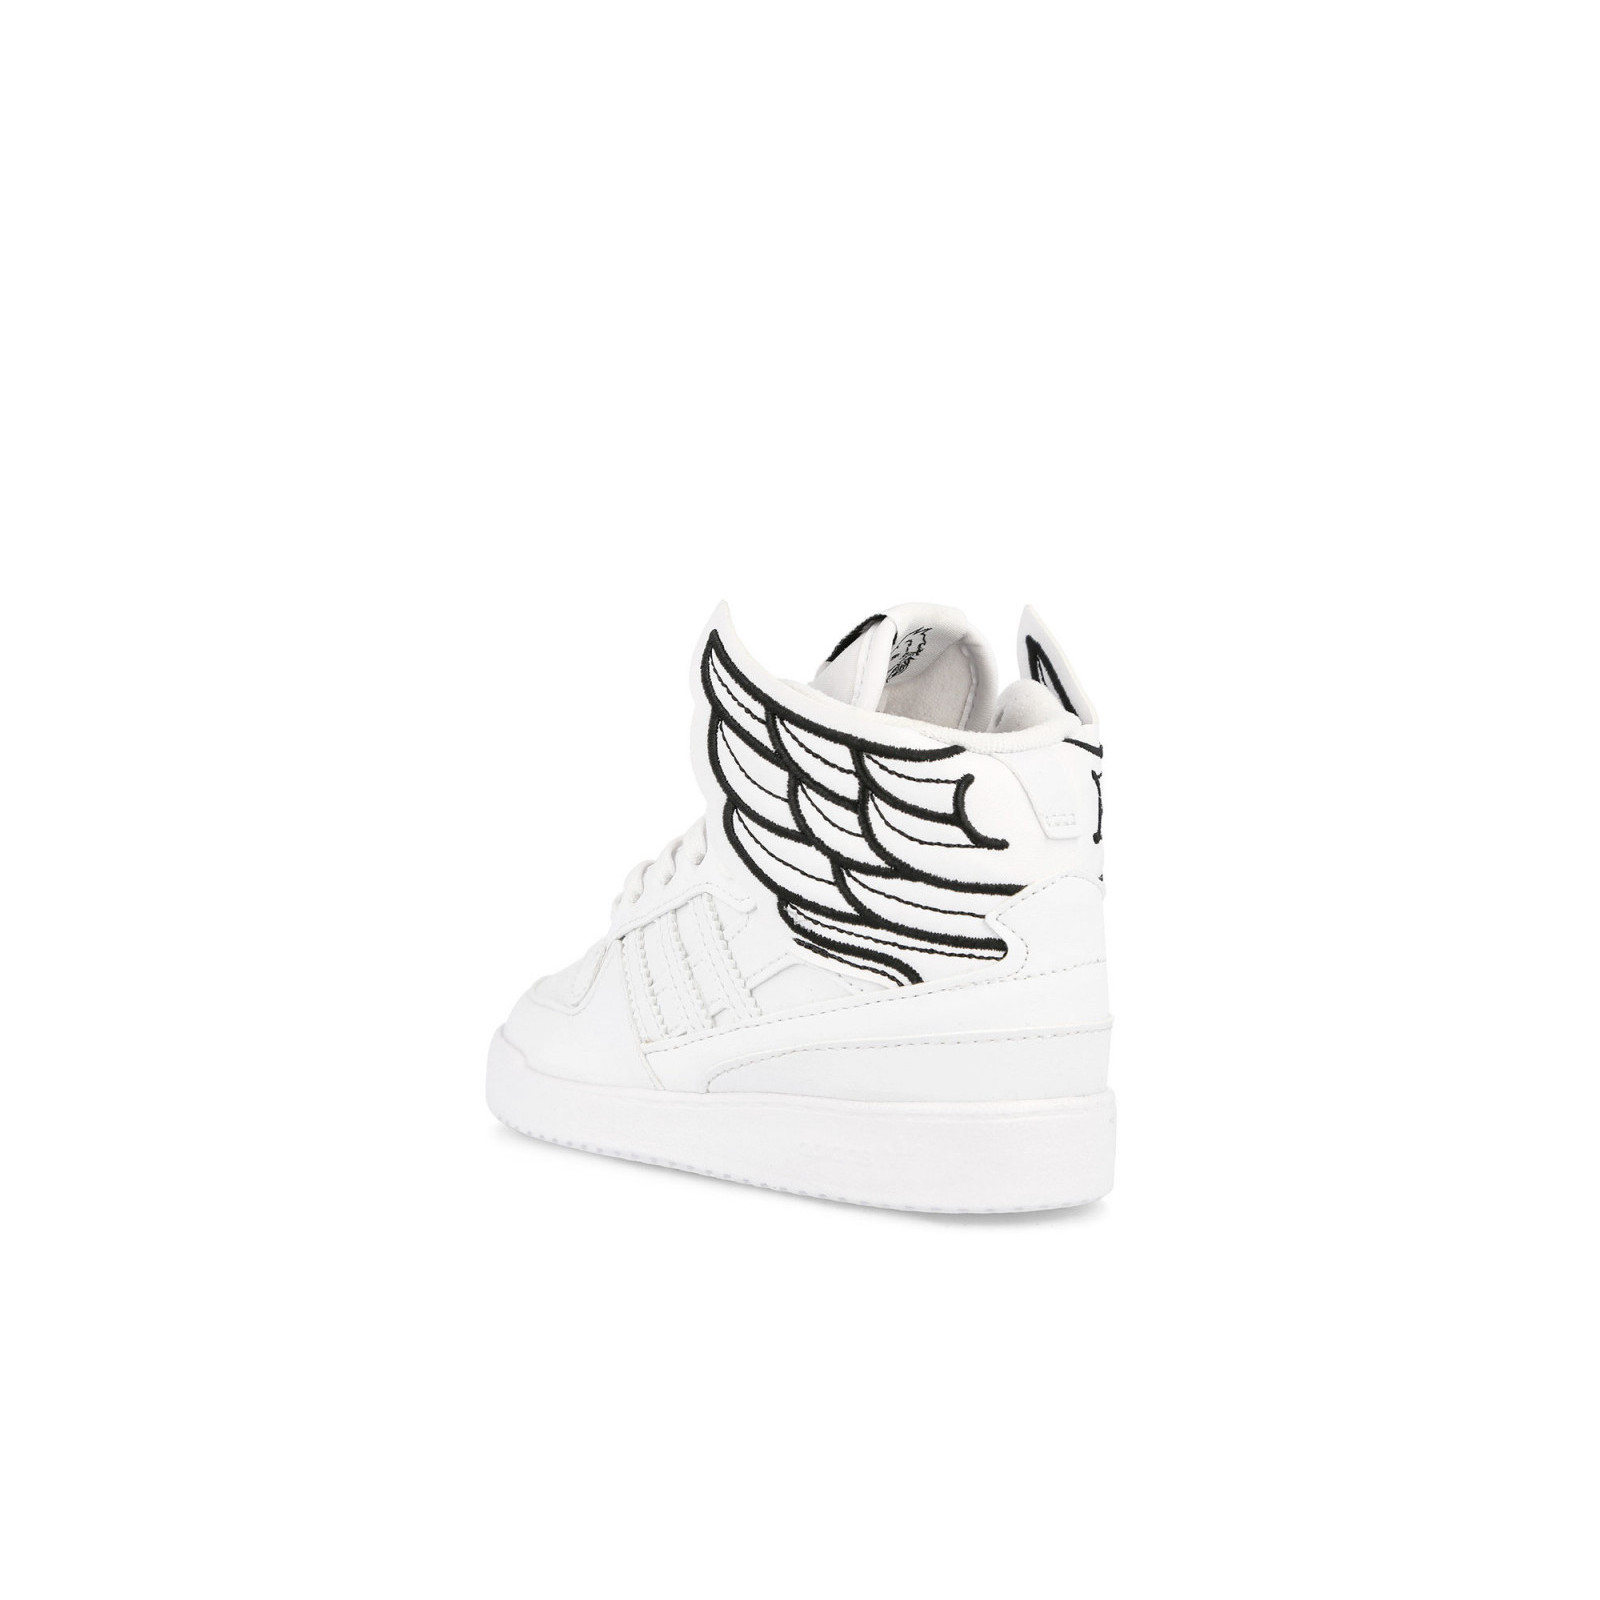 Jeremy Scott x Adidas New Wings 4.0 Infants